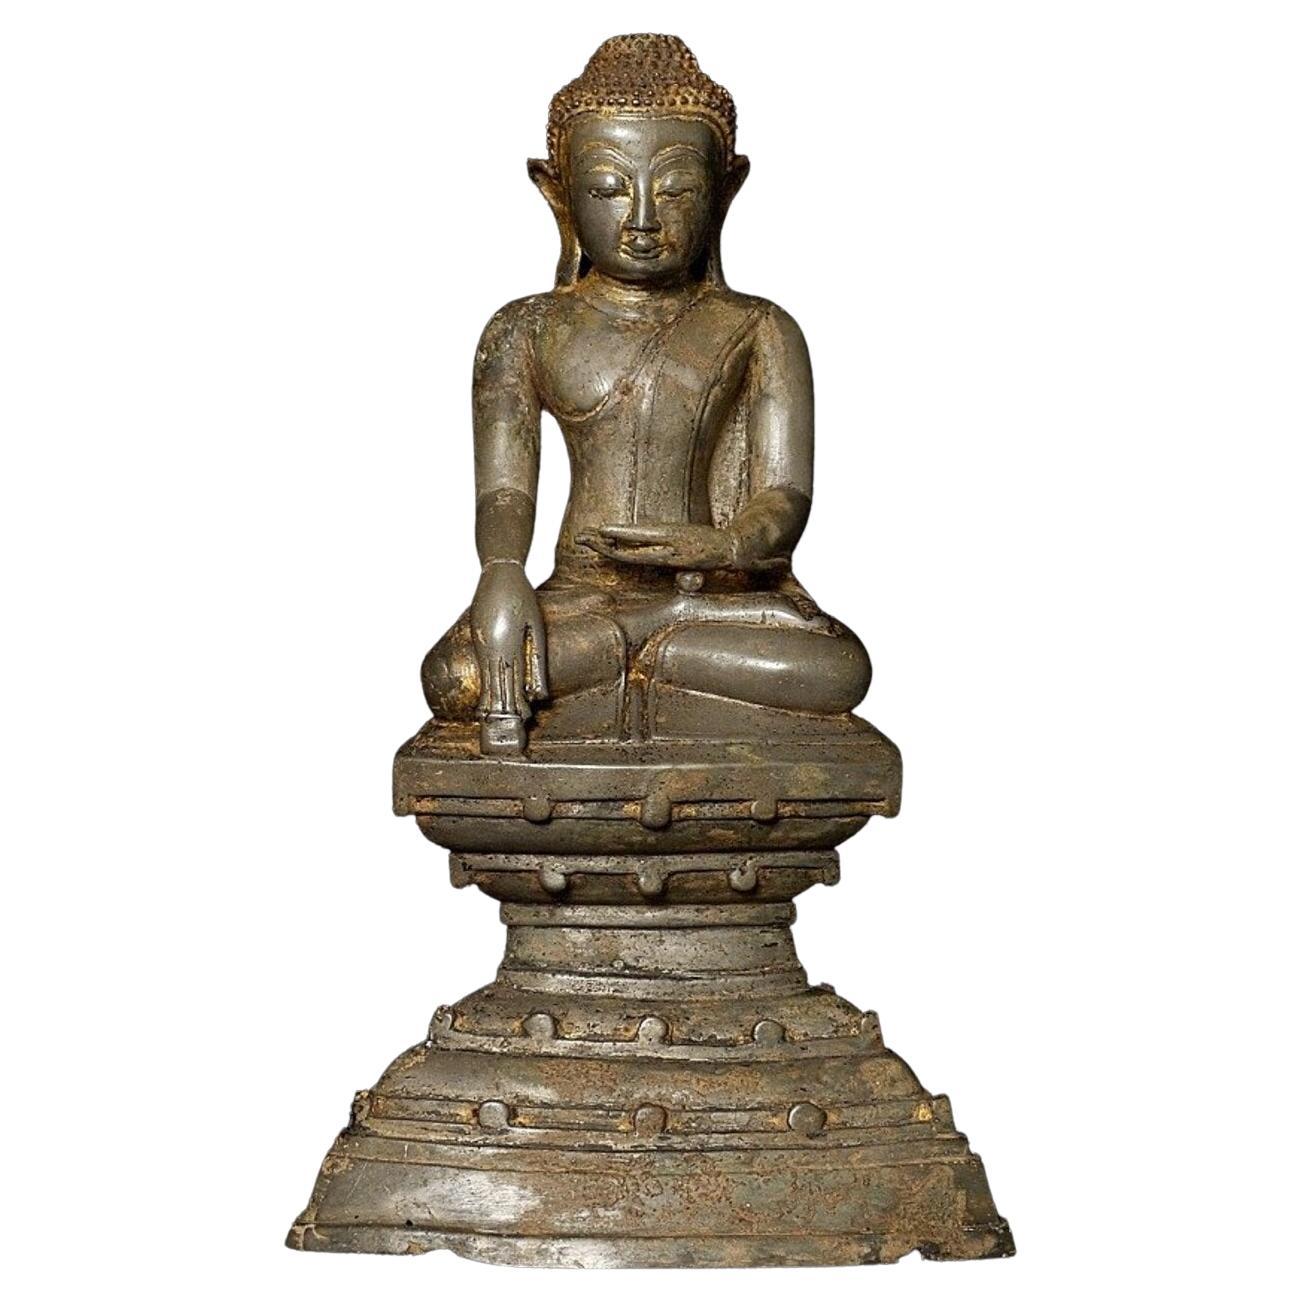 18th Century Burmese Buddha Statue from Burma